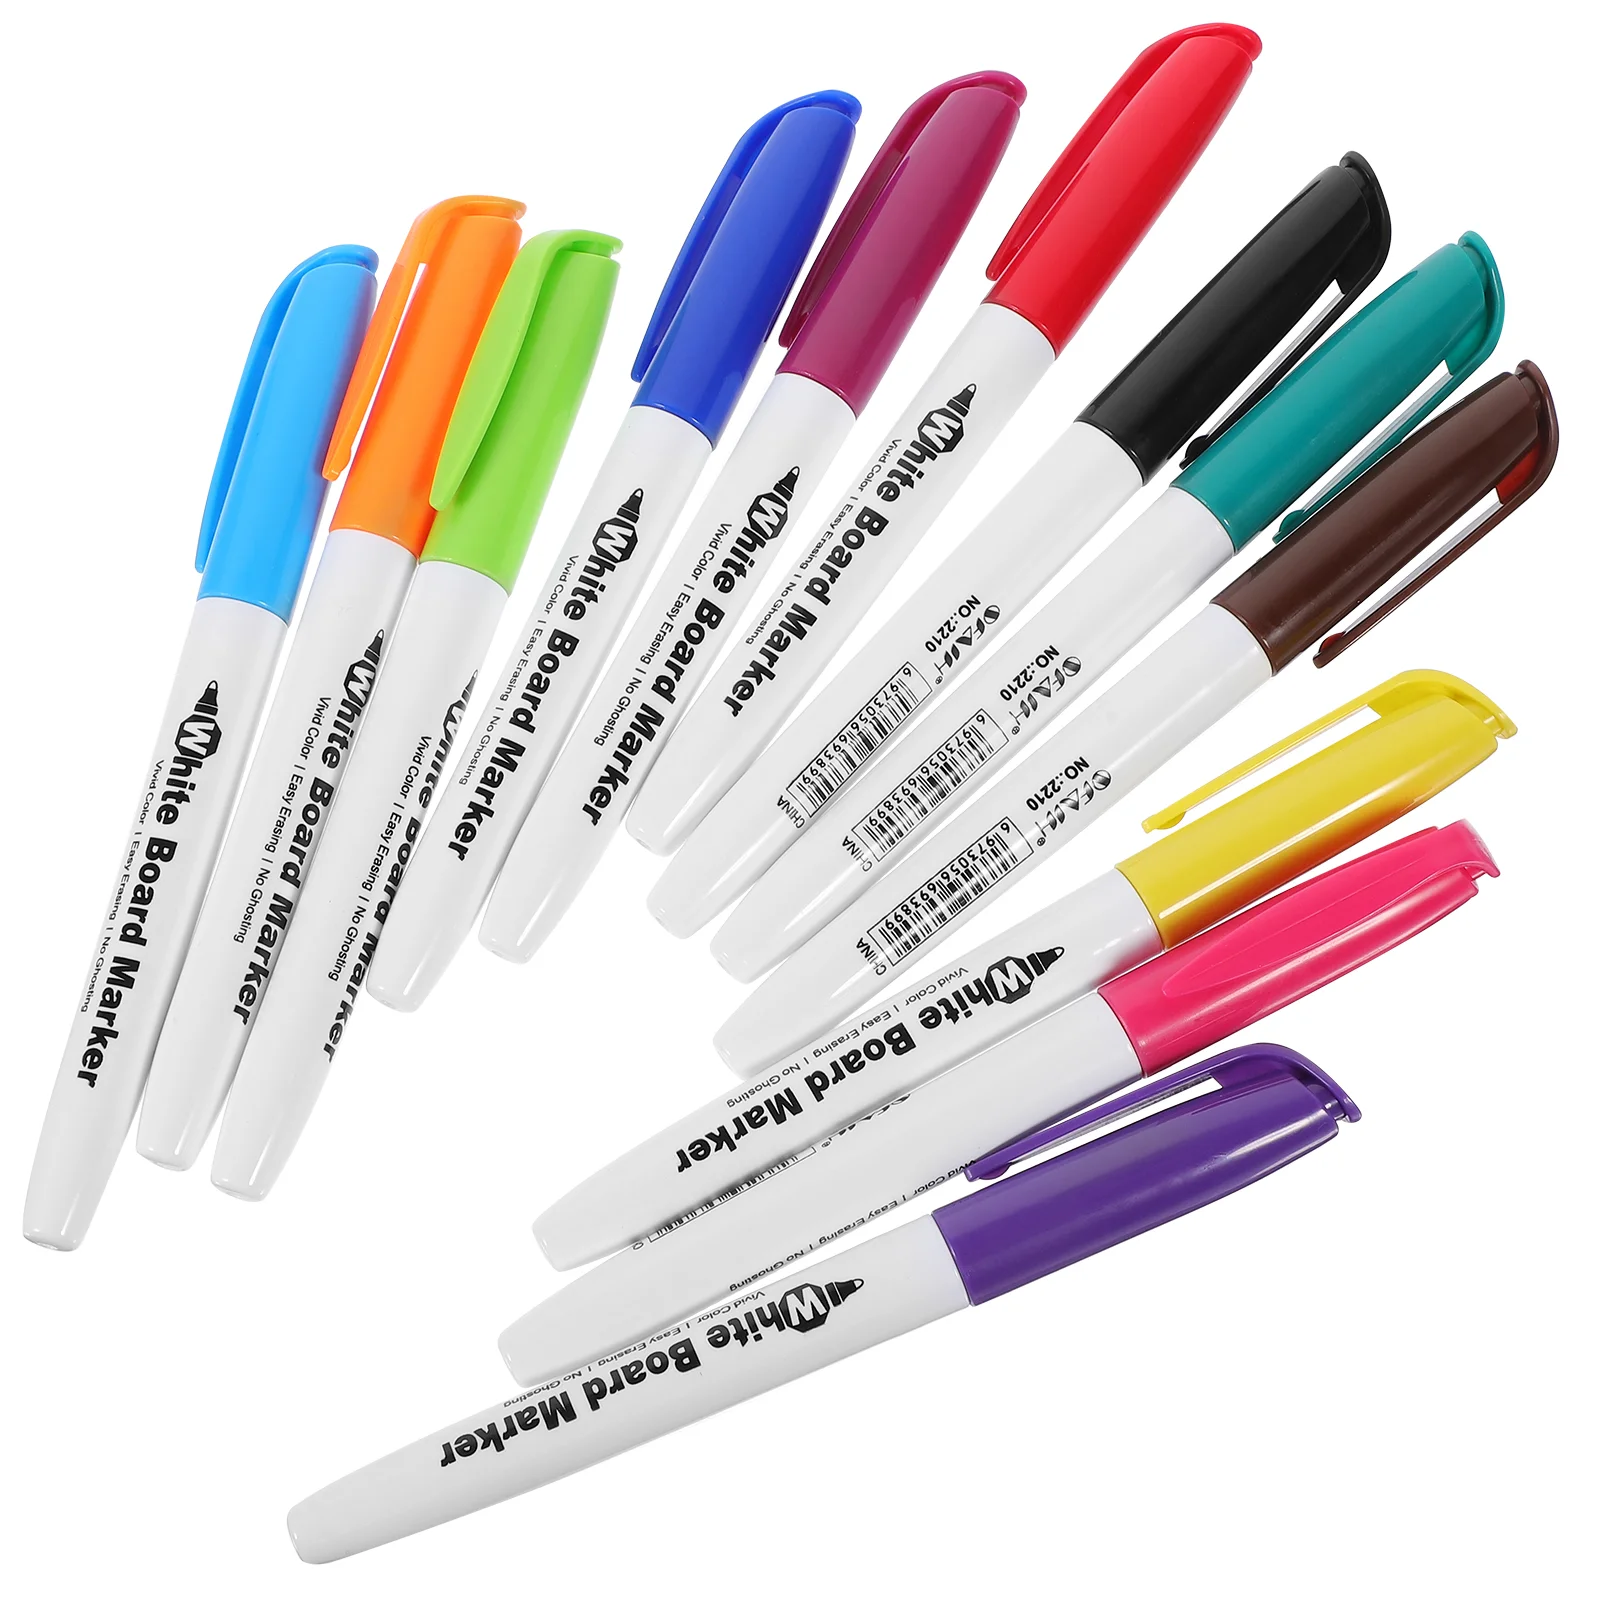 

12 Pcs Marker Pen Dry Erase Markers Erasable Pens Makers Whiteboard Ink Plastic Child